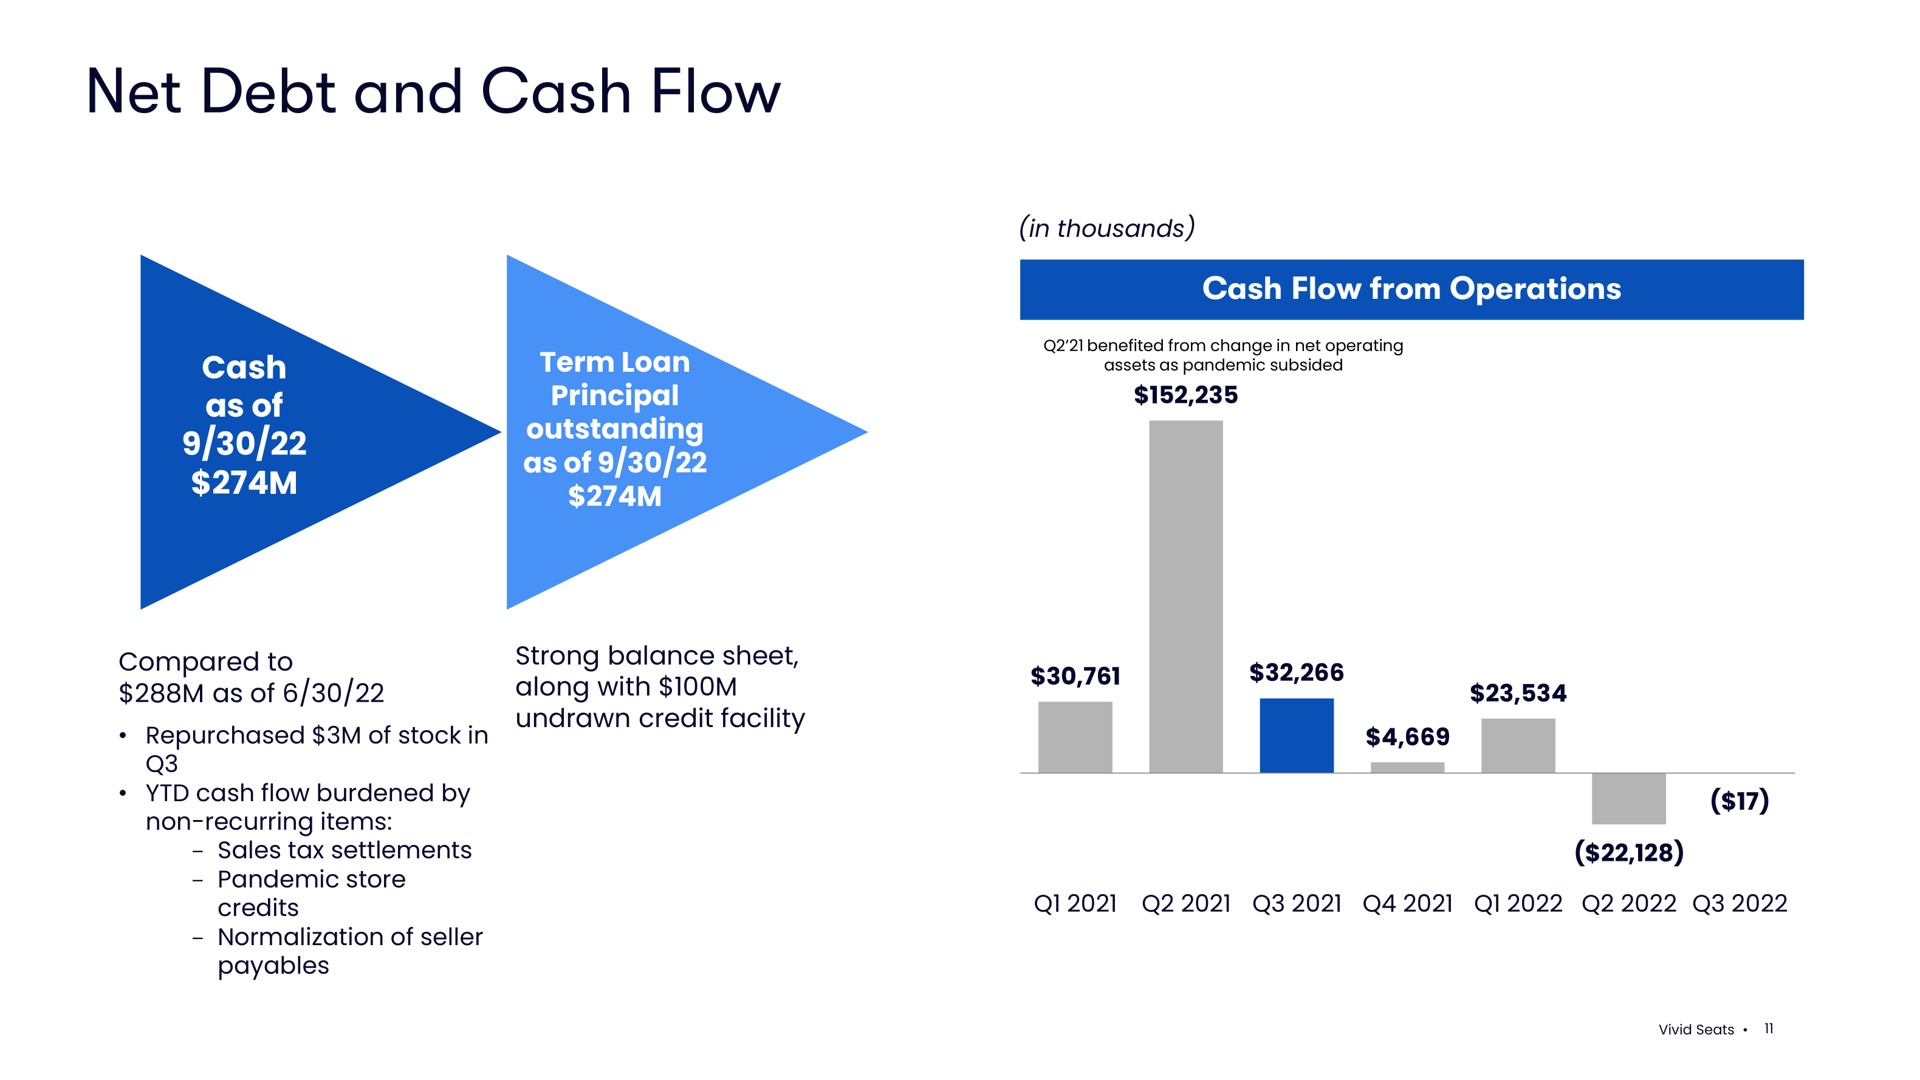 net debt and cash flow | Vivid Seats